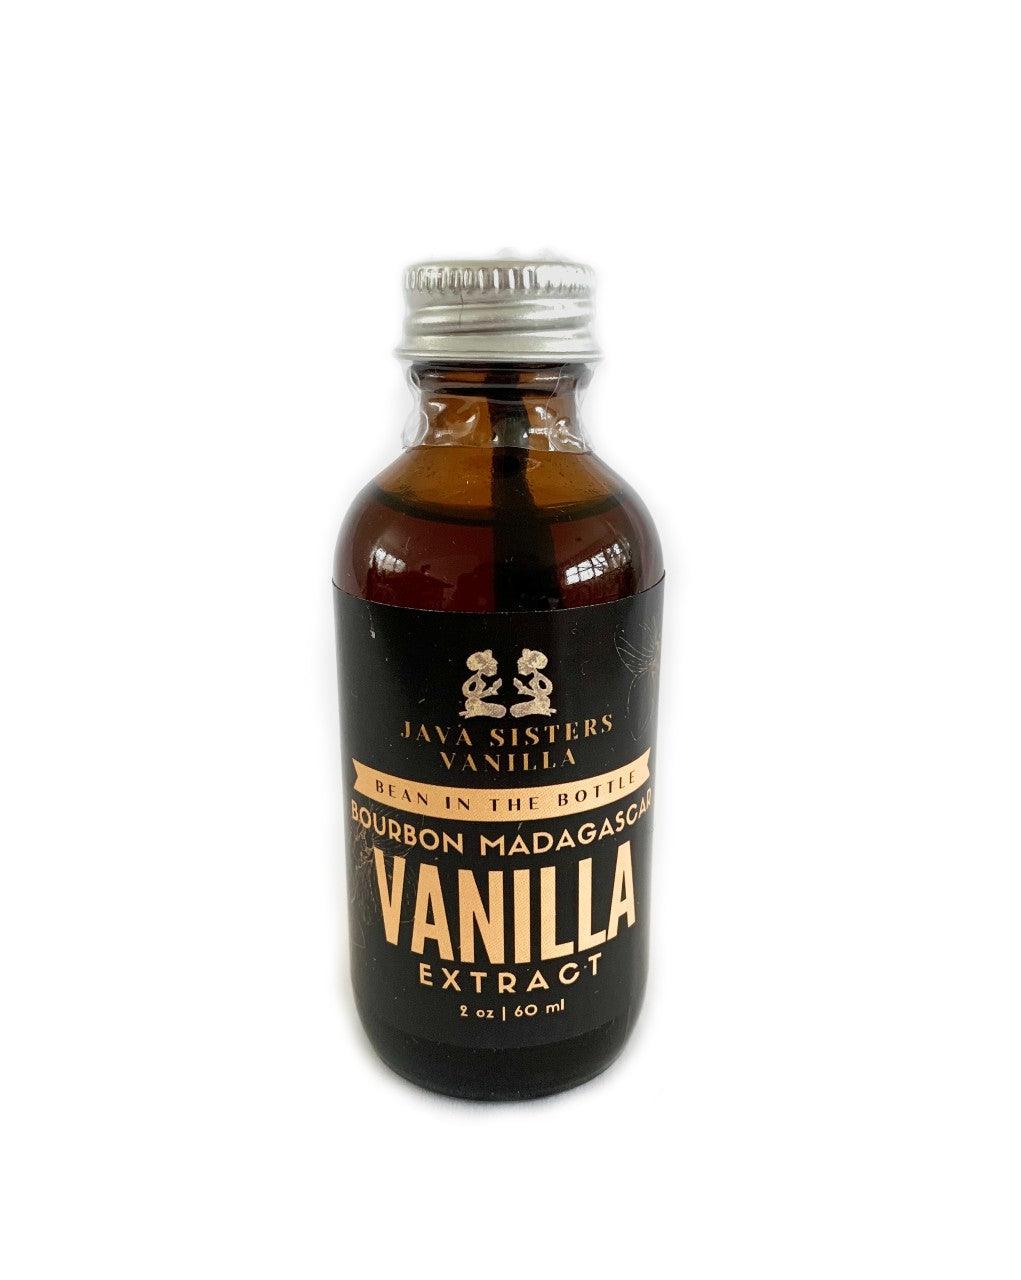 Madagascar Pure Vanilla Extract - A Bean in the Bottle. - Java Sisters Vanilla